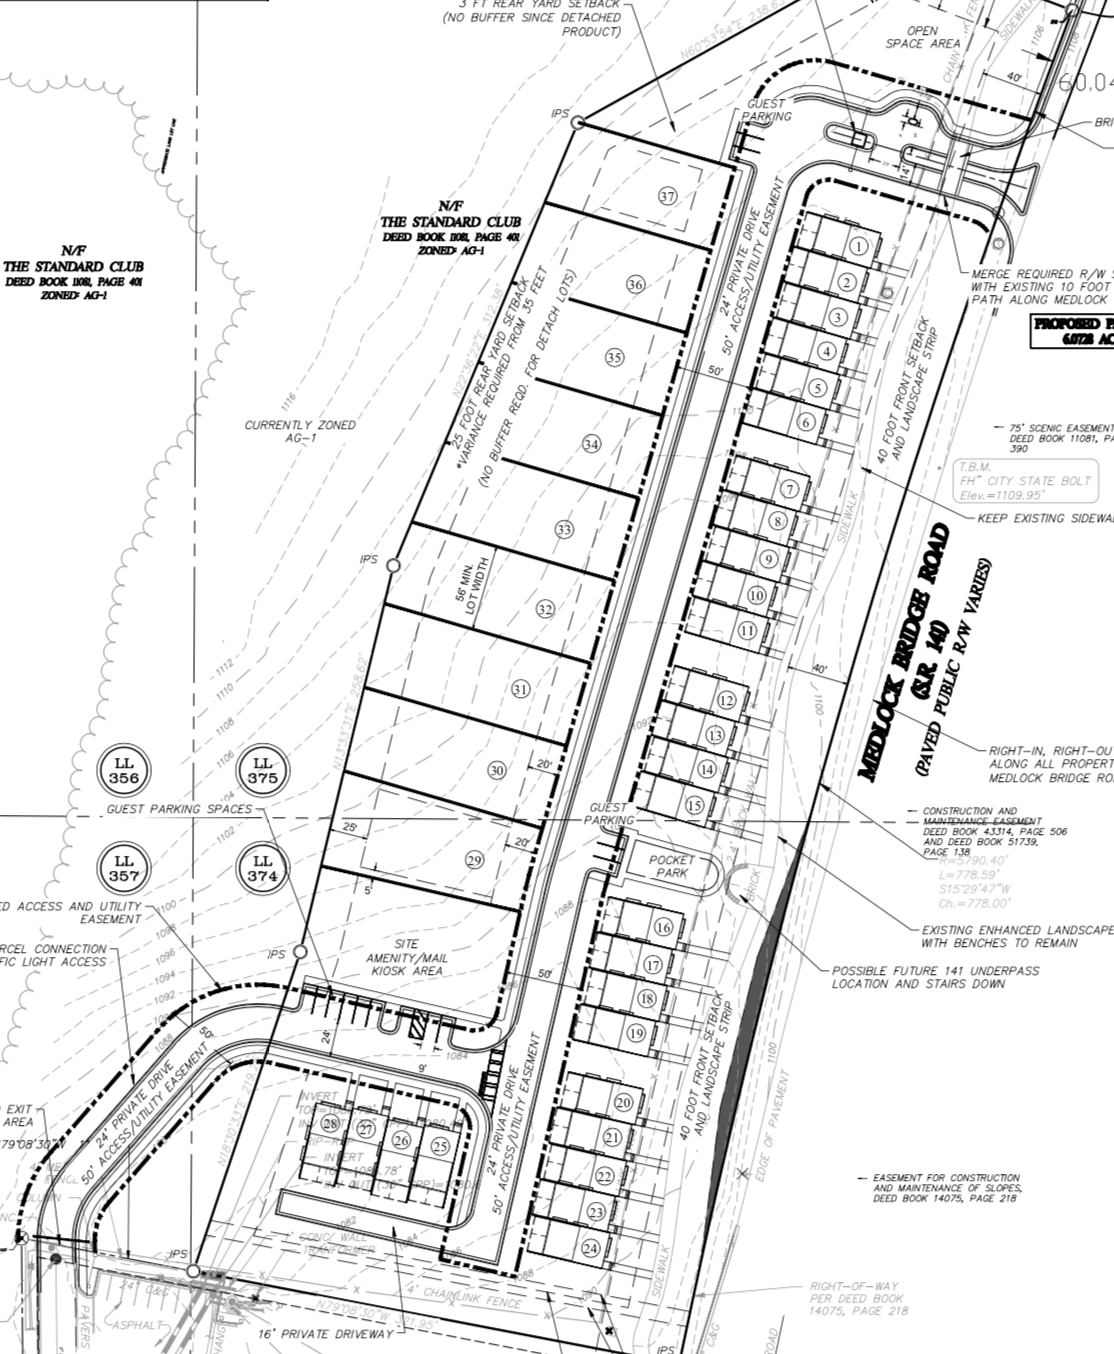 Standard-Club-rezoning-plan Johns Creek Post